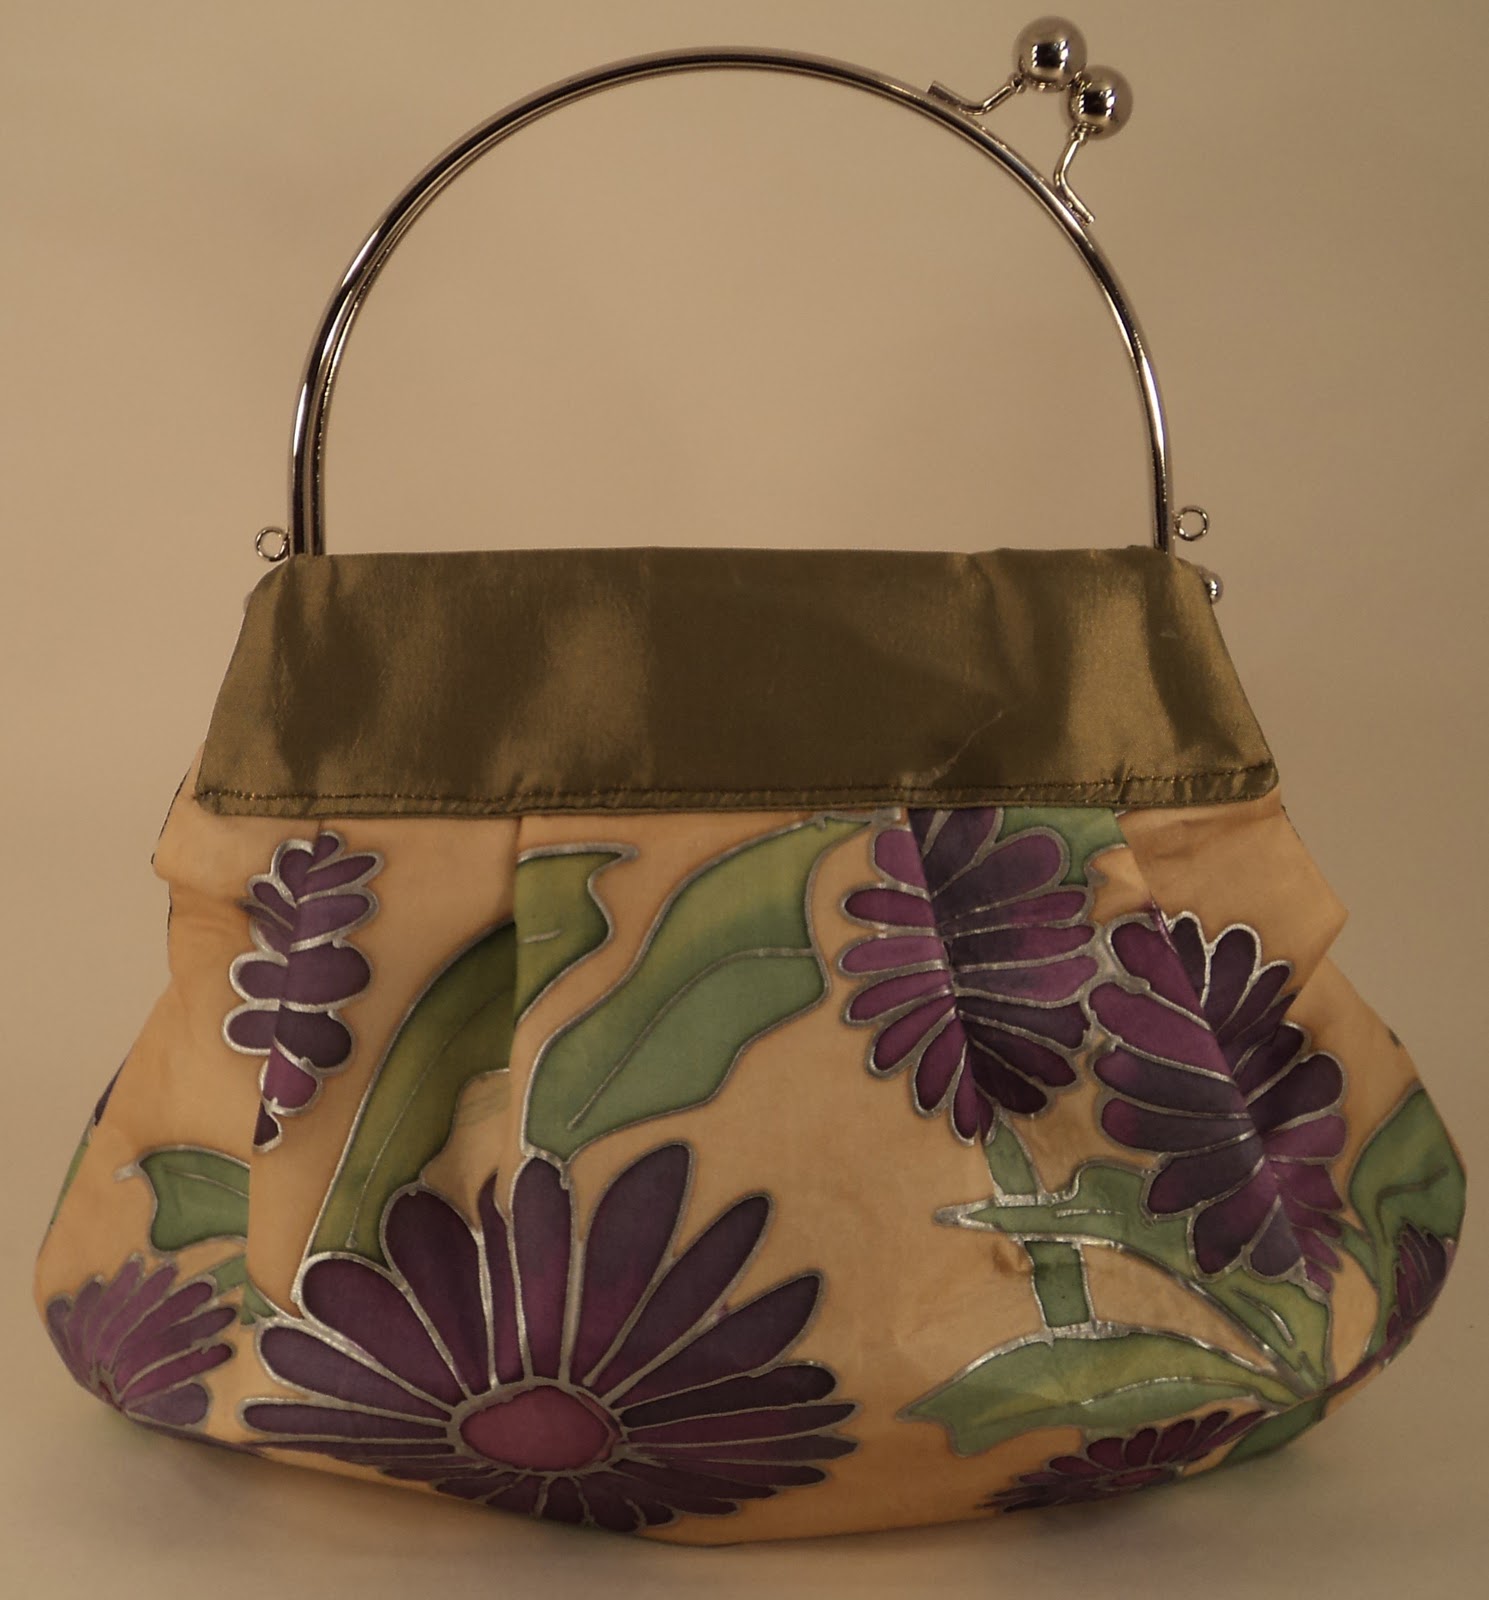 kokodesigns: New bag designs